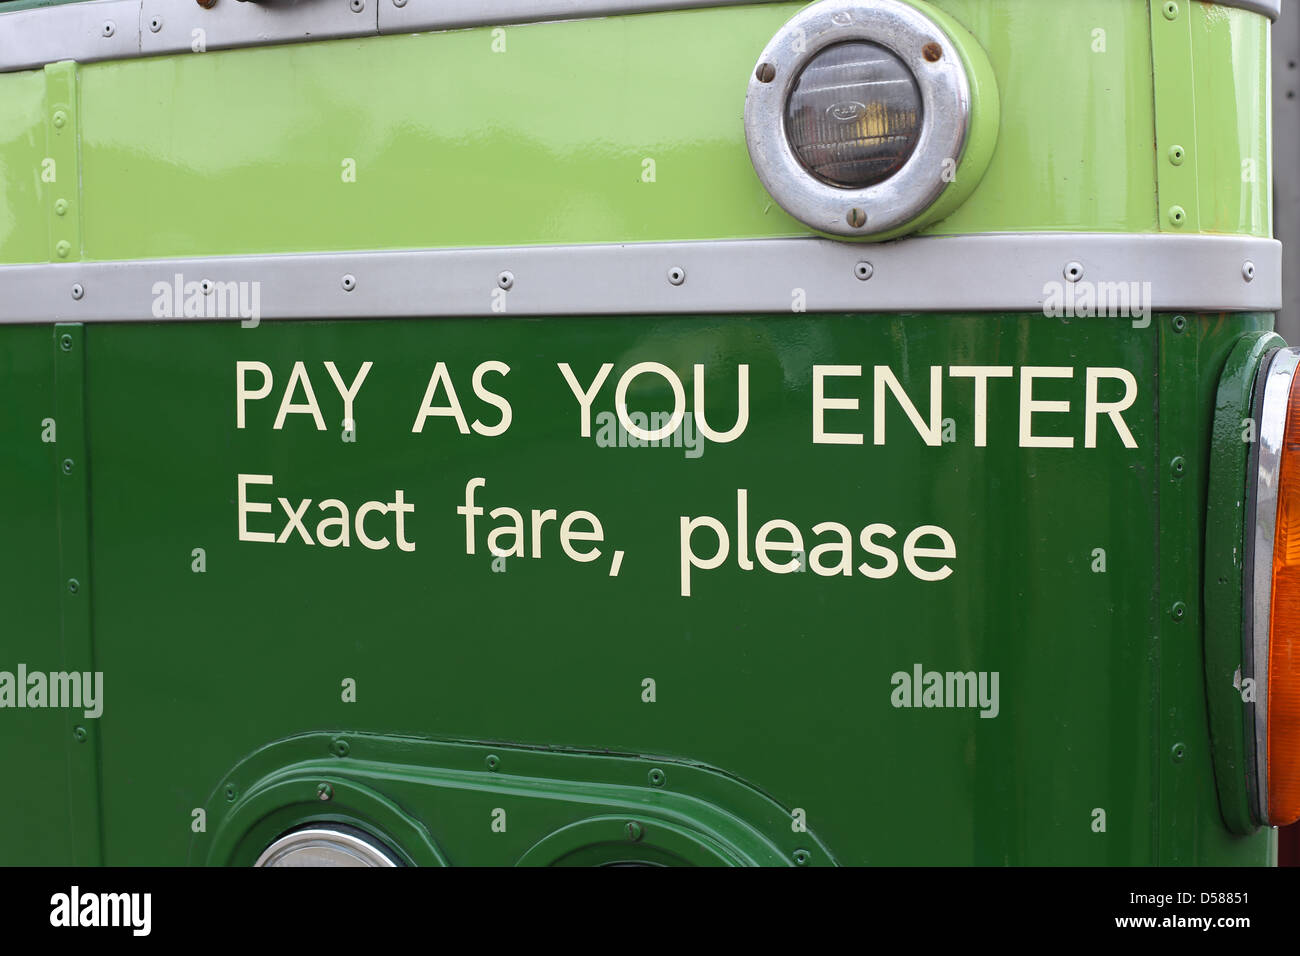 'Pay as you enter' bus sign Stock Photo